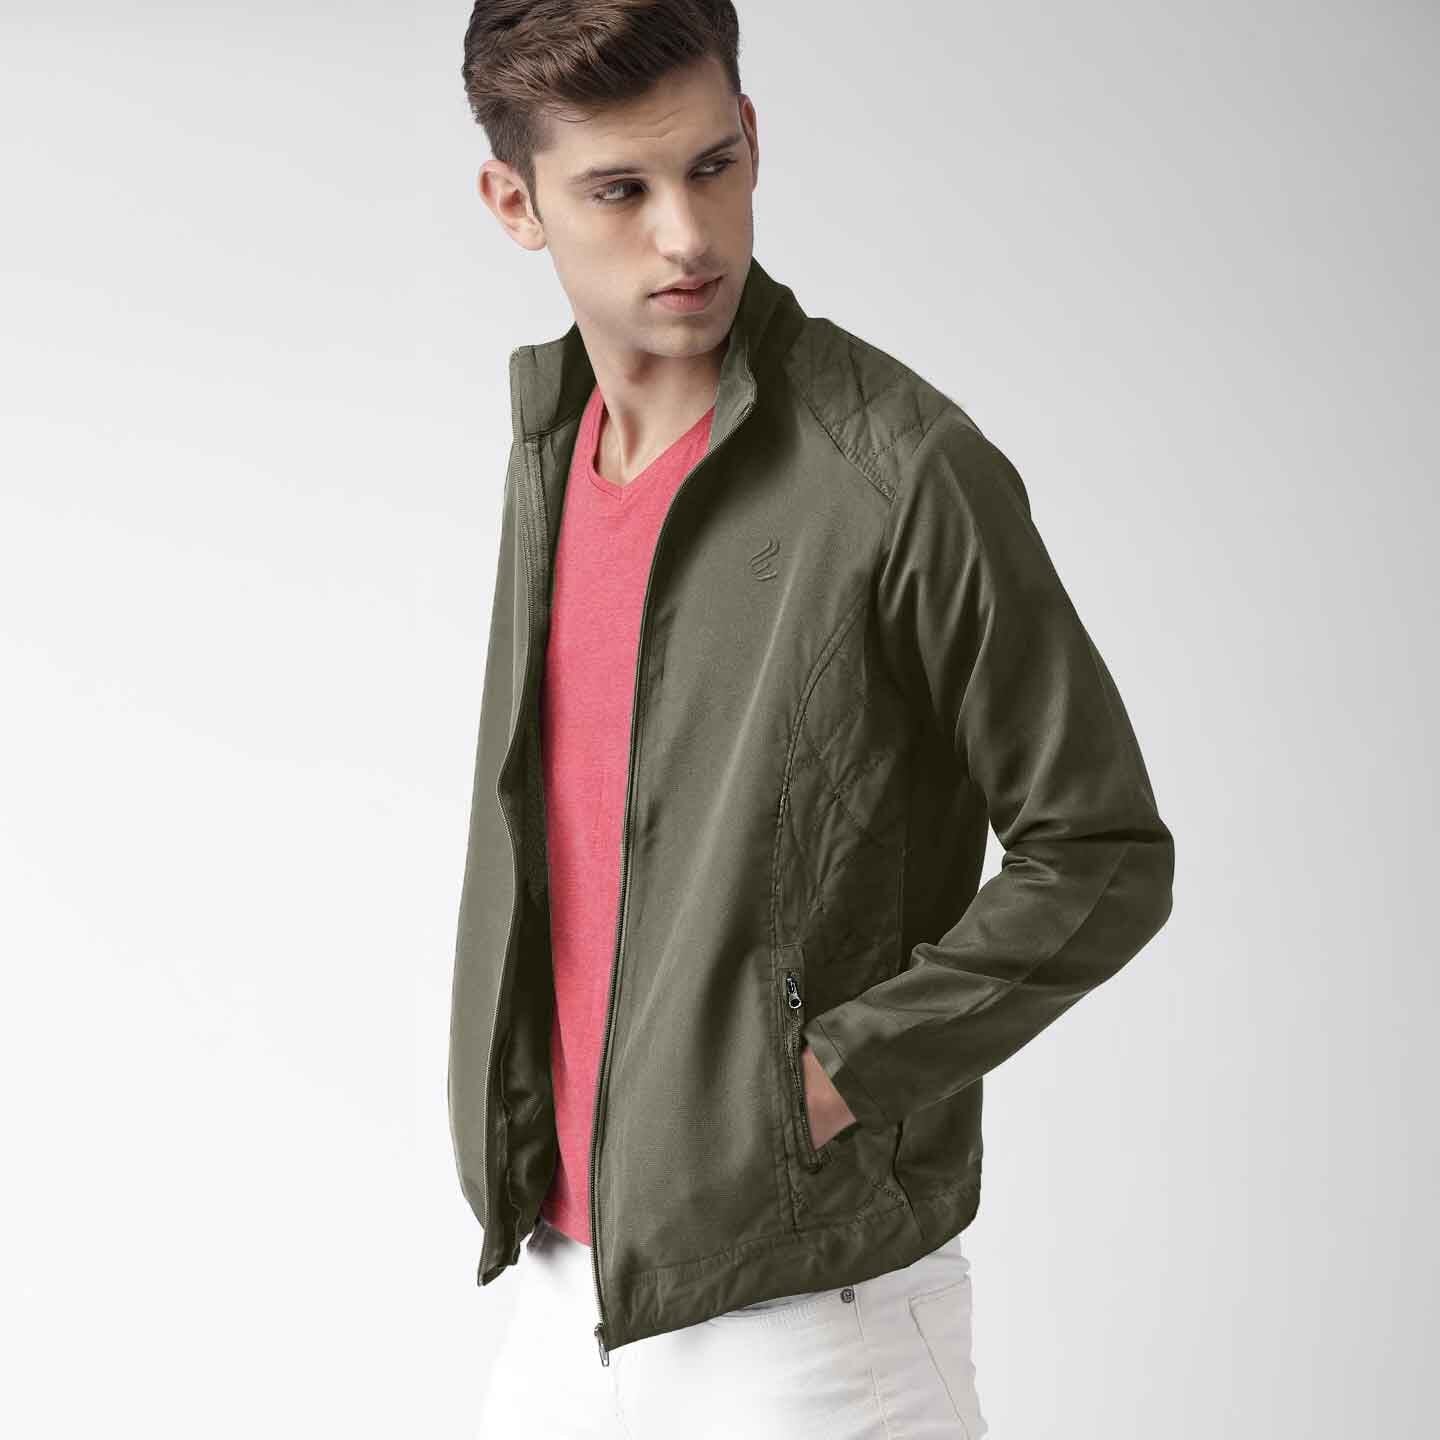 Fashion Men's Classic Long Sleeve Zipper Jacket Men's Jacket First Choice Olive XL 